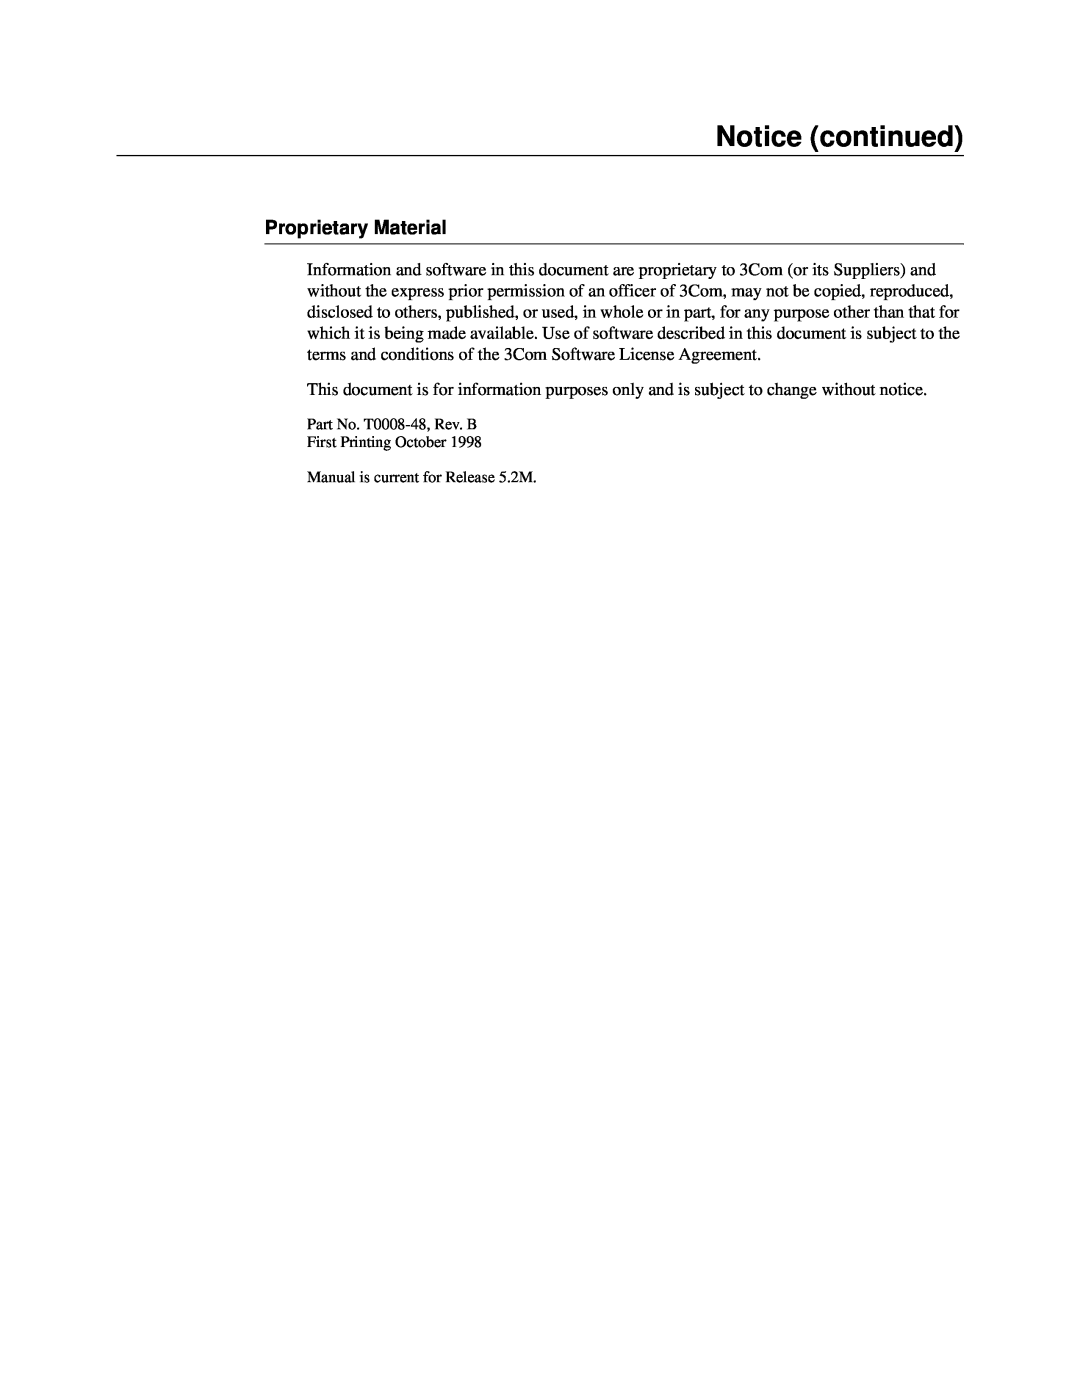 3Com S200 manual Proprietary Material, Notice continued 